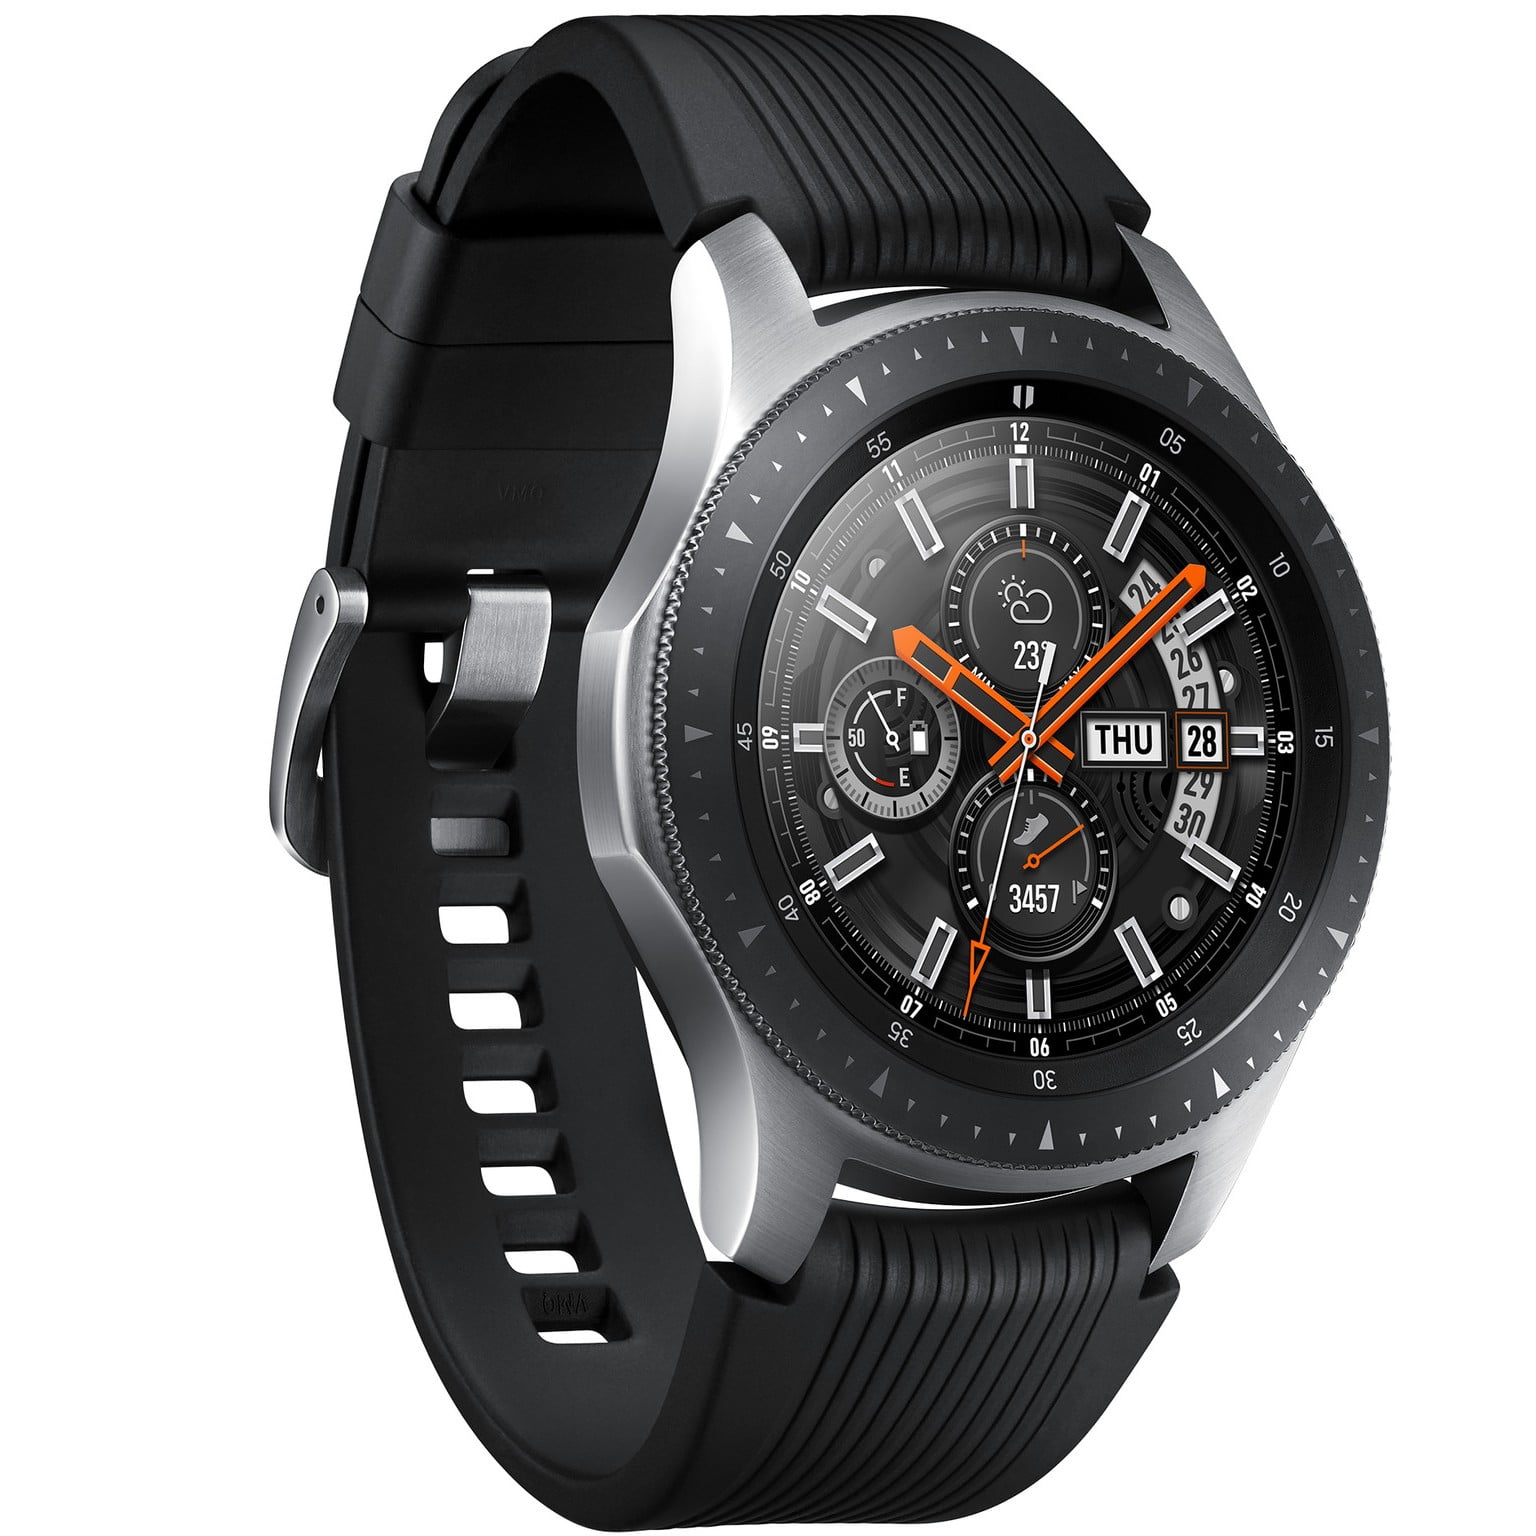 samsung galaxy watch r810 price